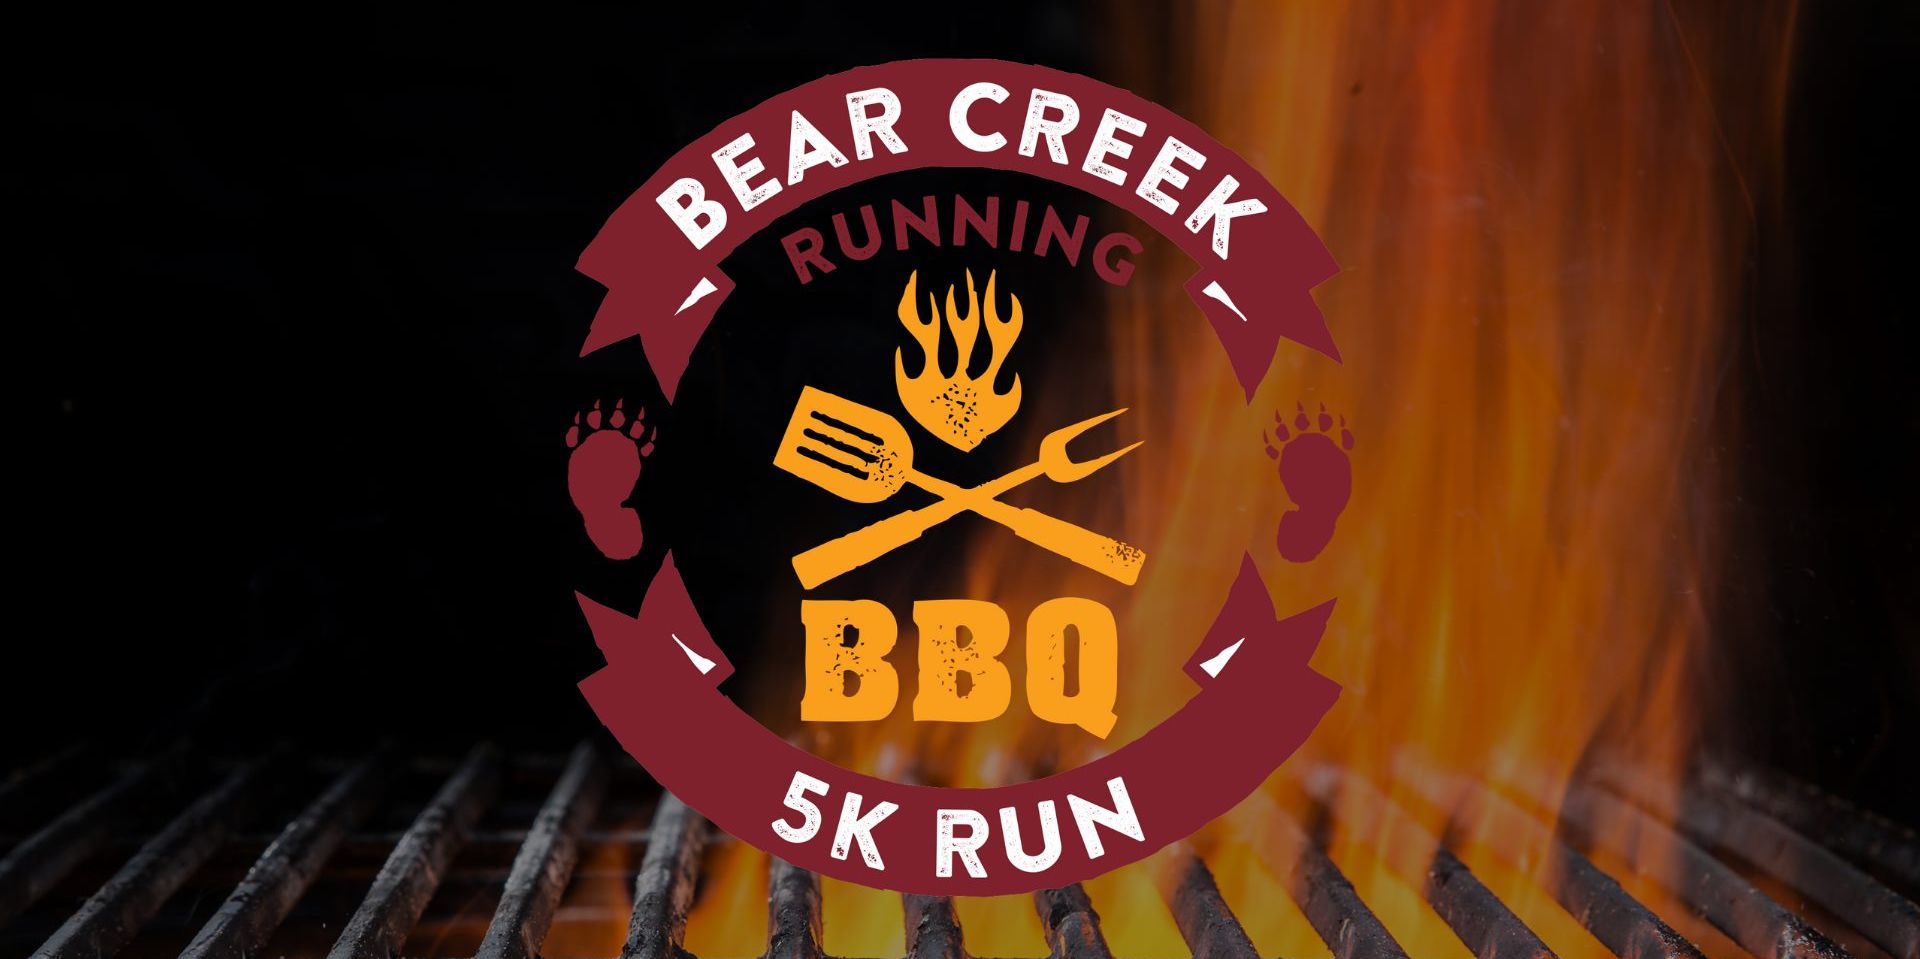 Bear Creek Running BBQ Run promotional image